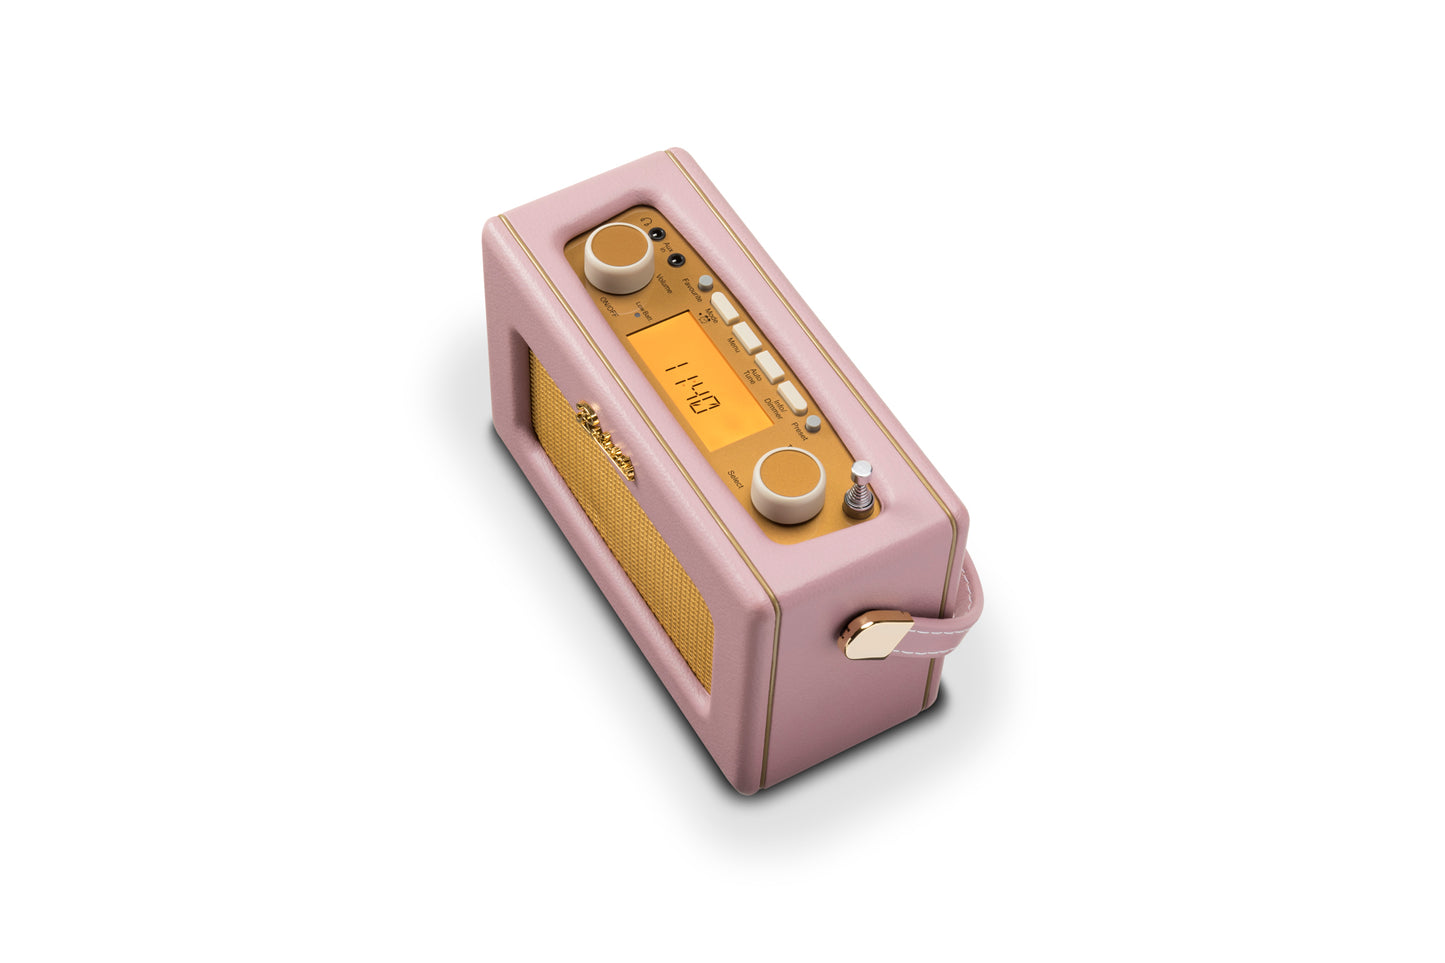 Revival Uno BT | dusky pink | tragbares DAB+/FM Radio mit Bluetooth